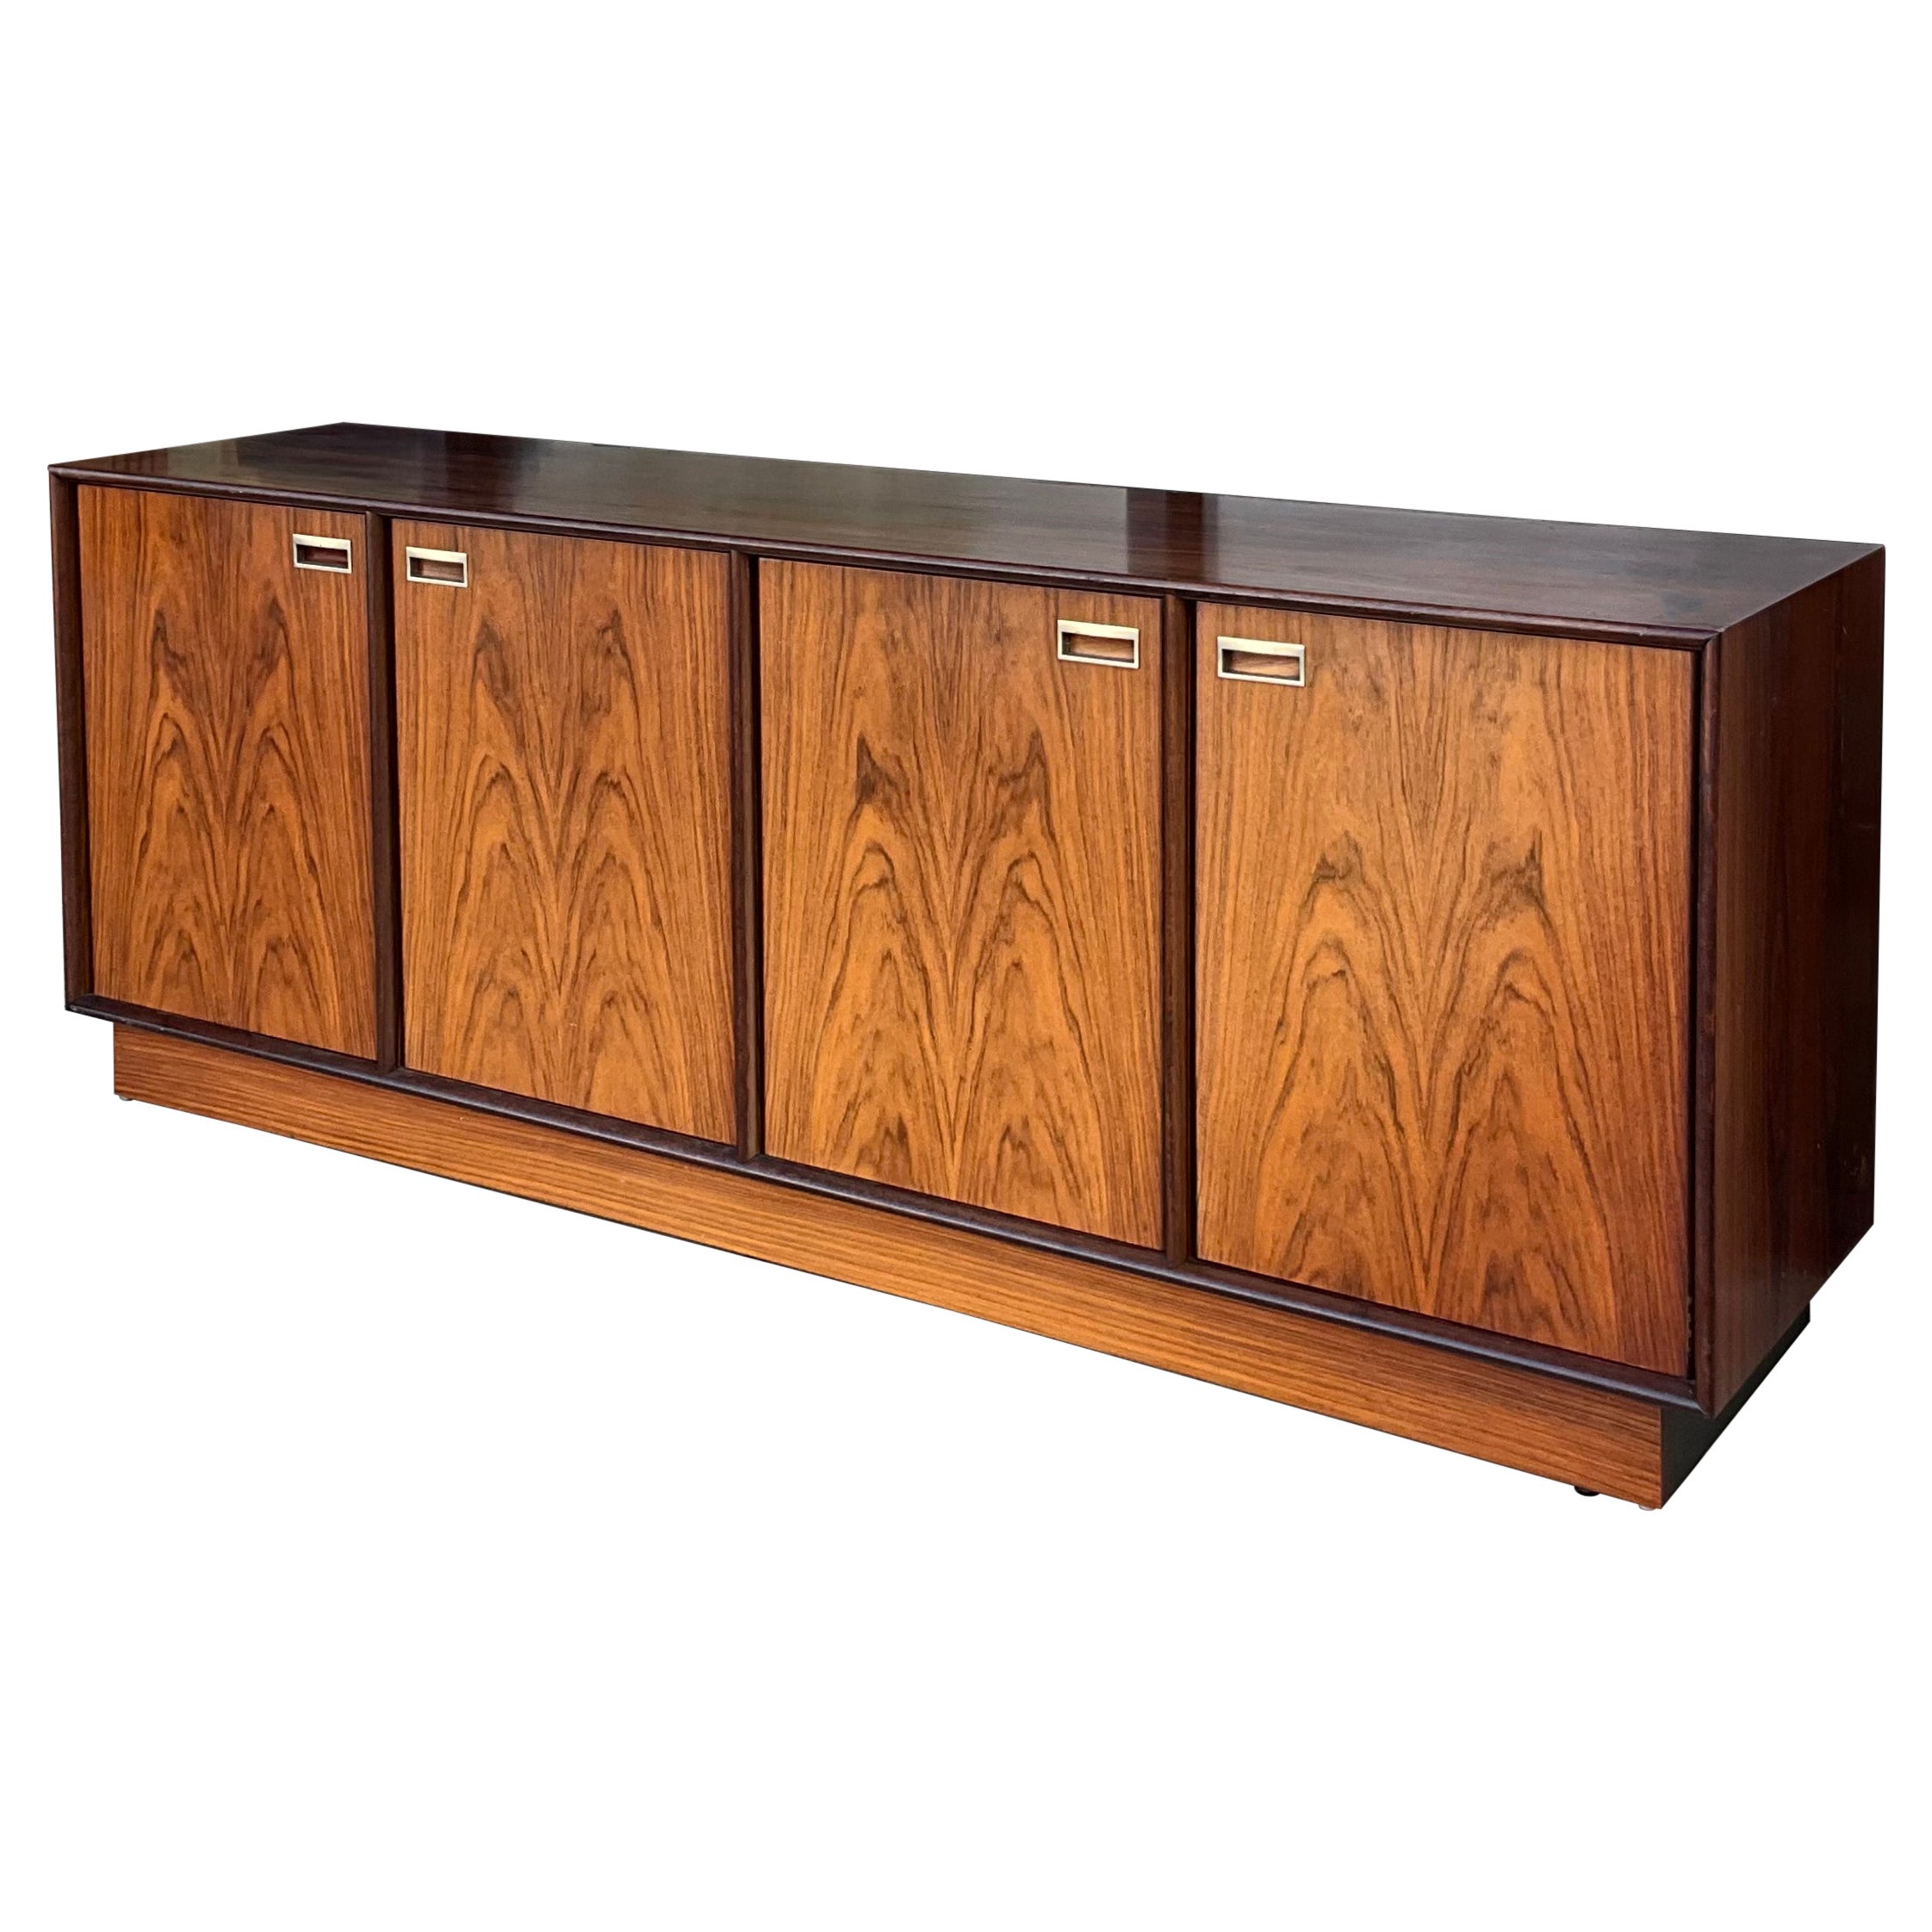 Midcentury Danish Modern Rosewood Veneer Credenza / Cabinet / Sideboard For Sale